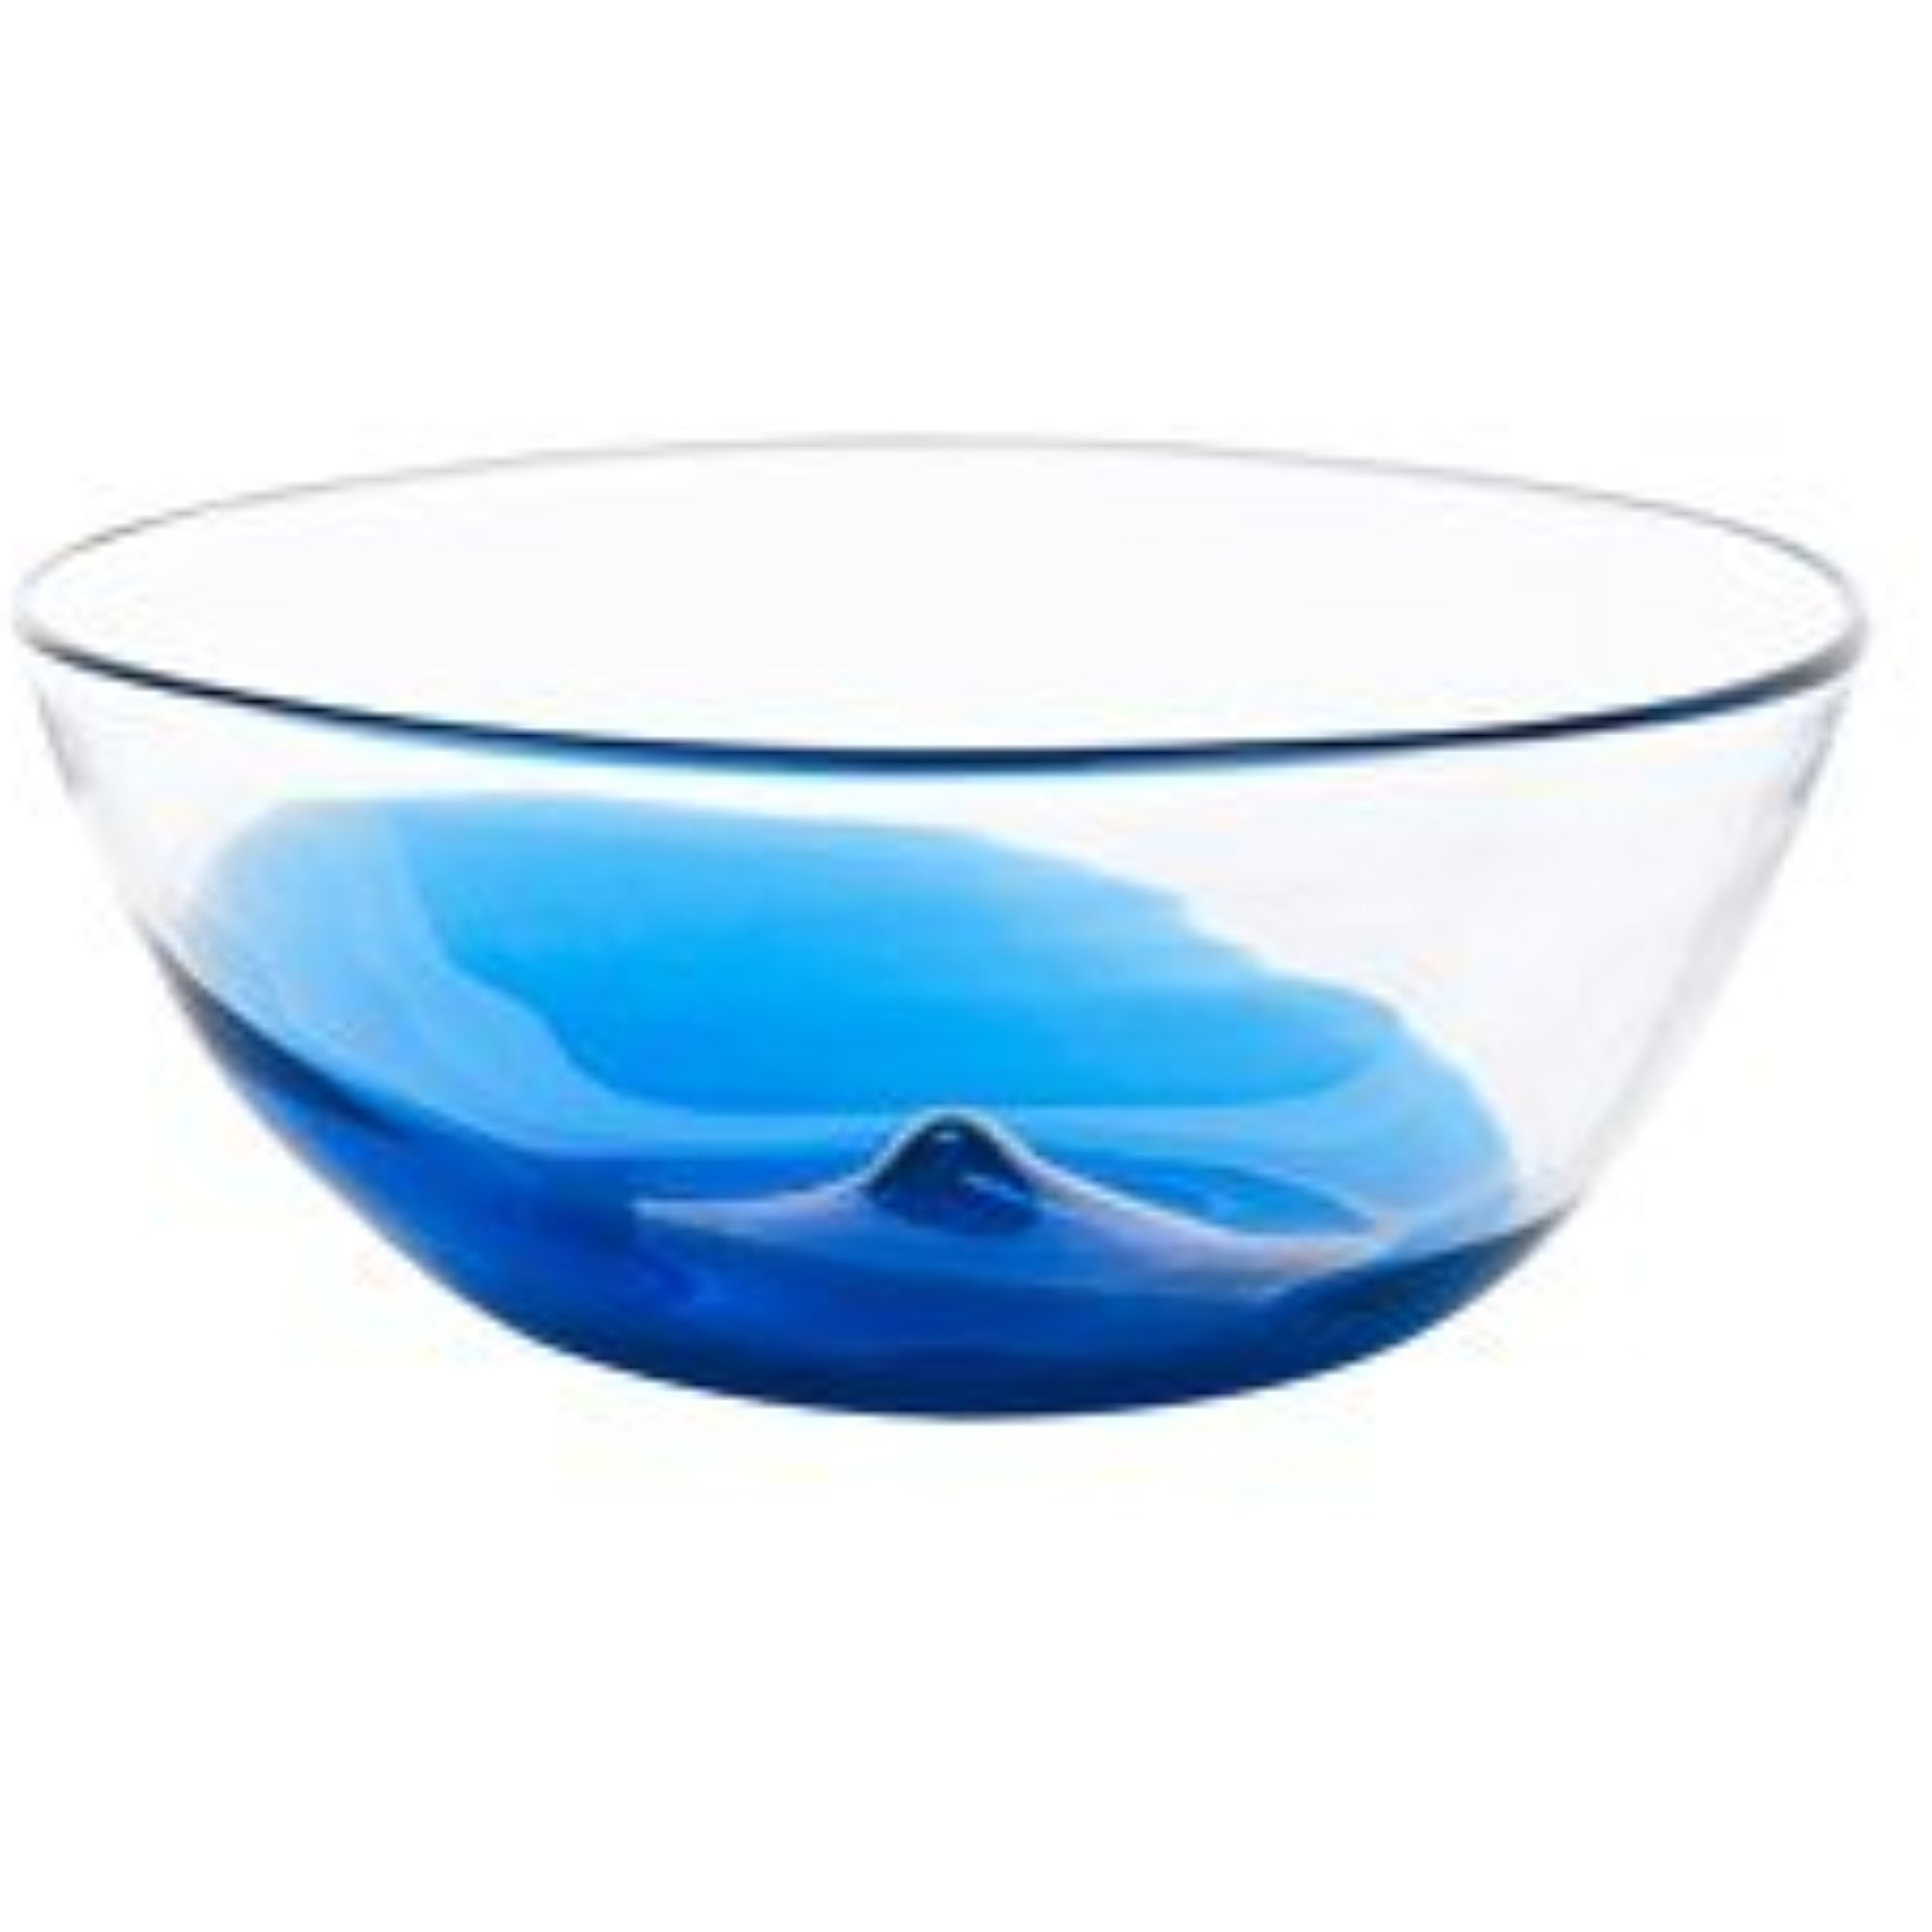 LÄTTBAKAD Bowl scraper, silicone/light blue - IKEA